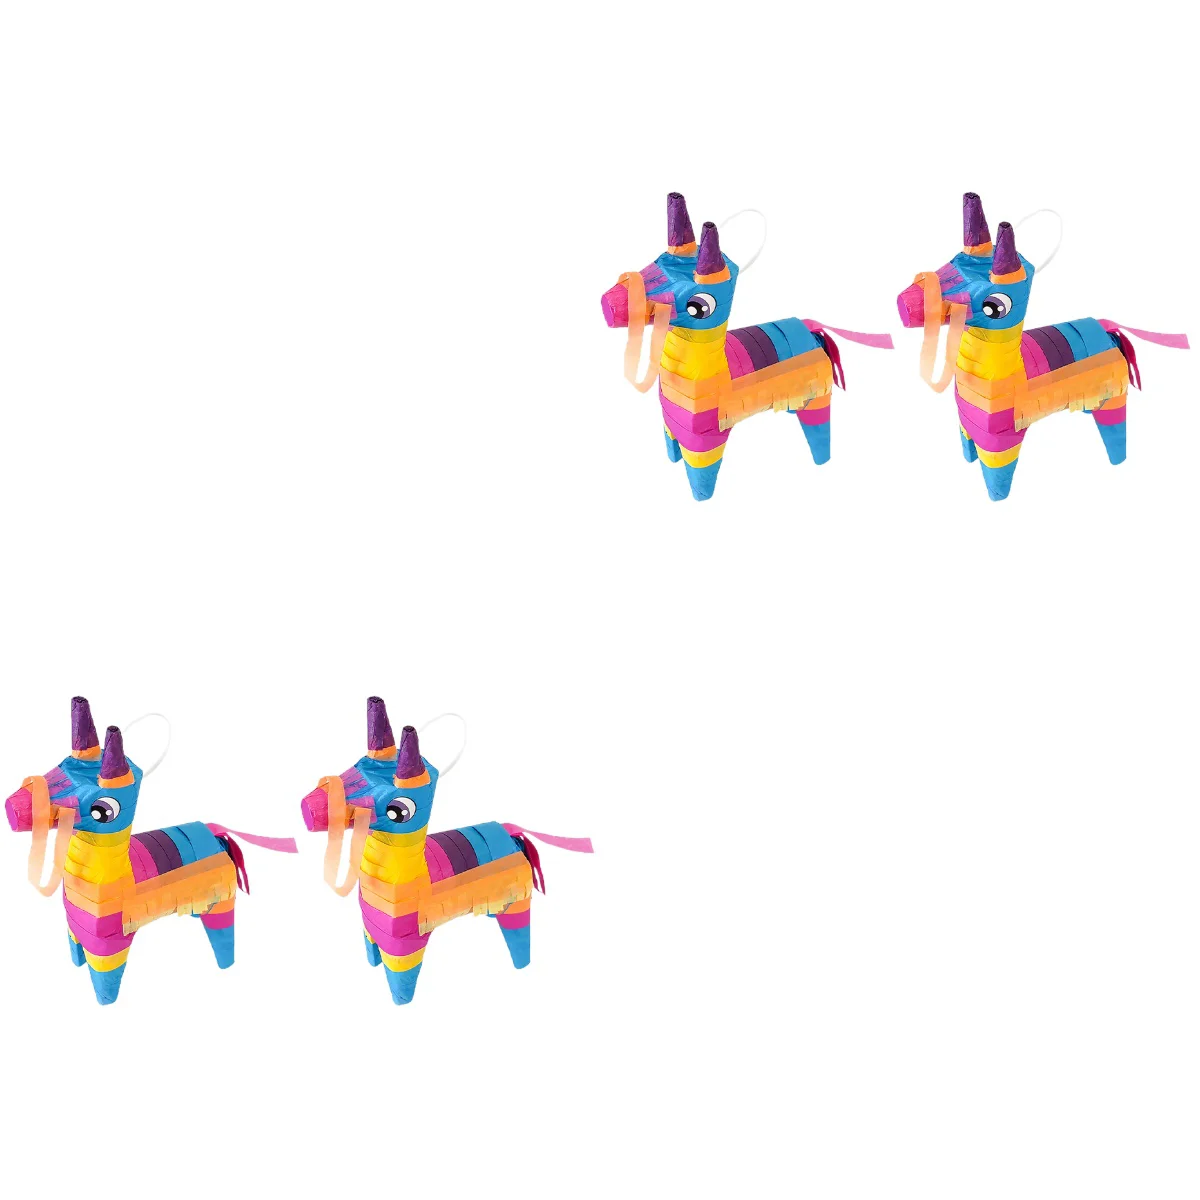 

4 pcs Colorful Donkey Pinata Toy Hanging Pinata Decor Cinco de Mayo Mexican Party Supplies